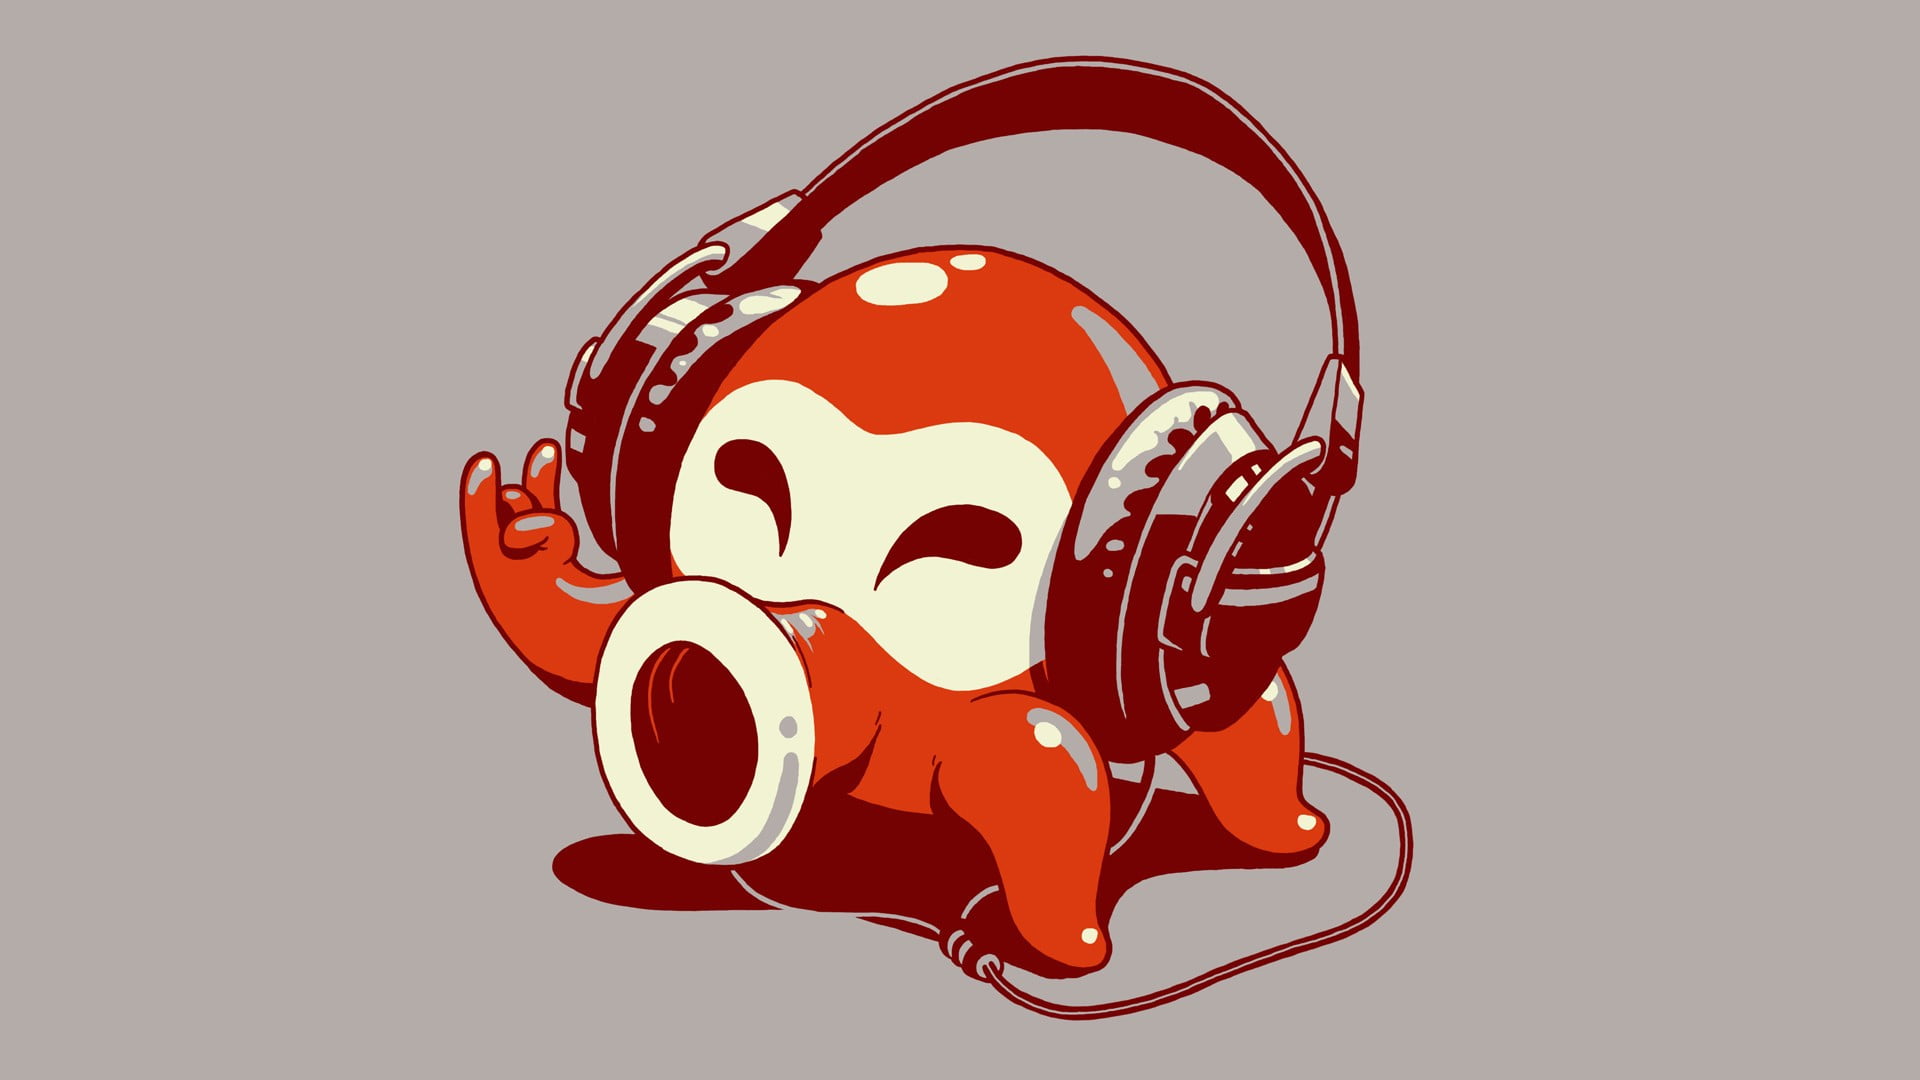 brown octopus wearing headphones illustration, Super Mario Bros., minimalism